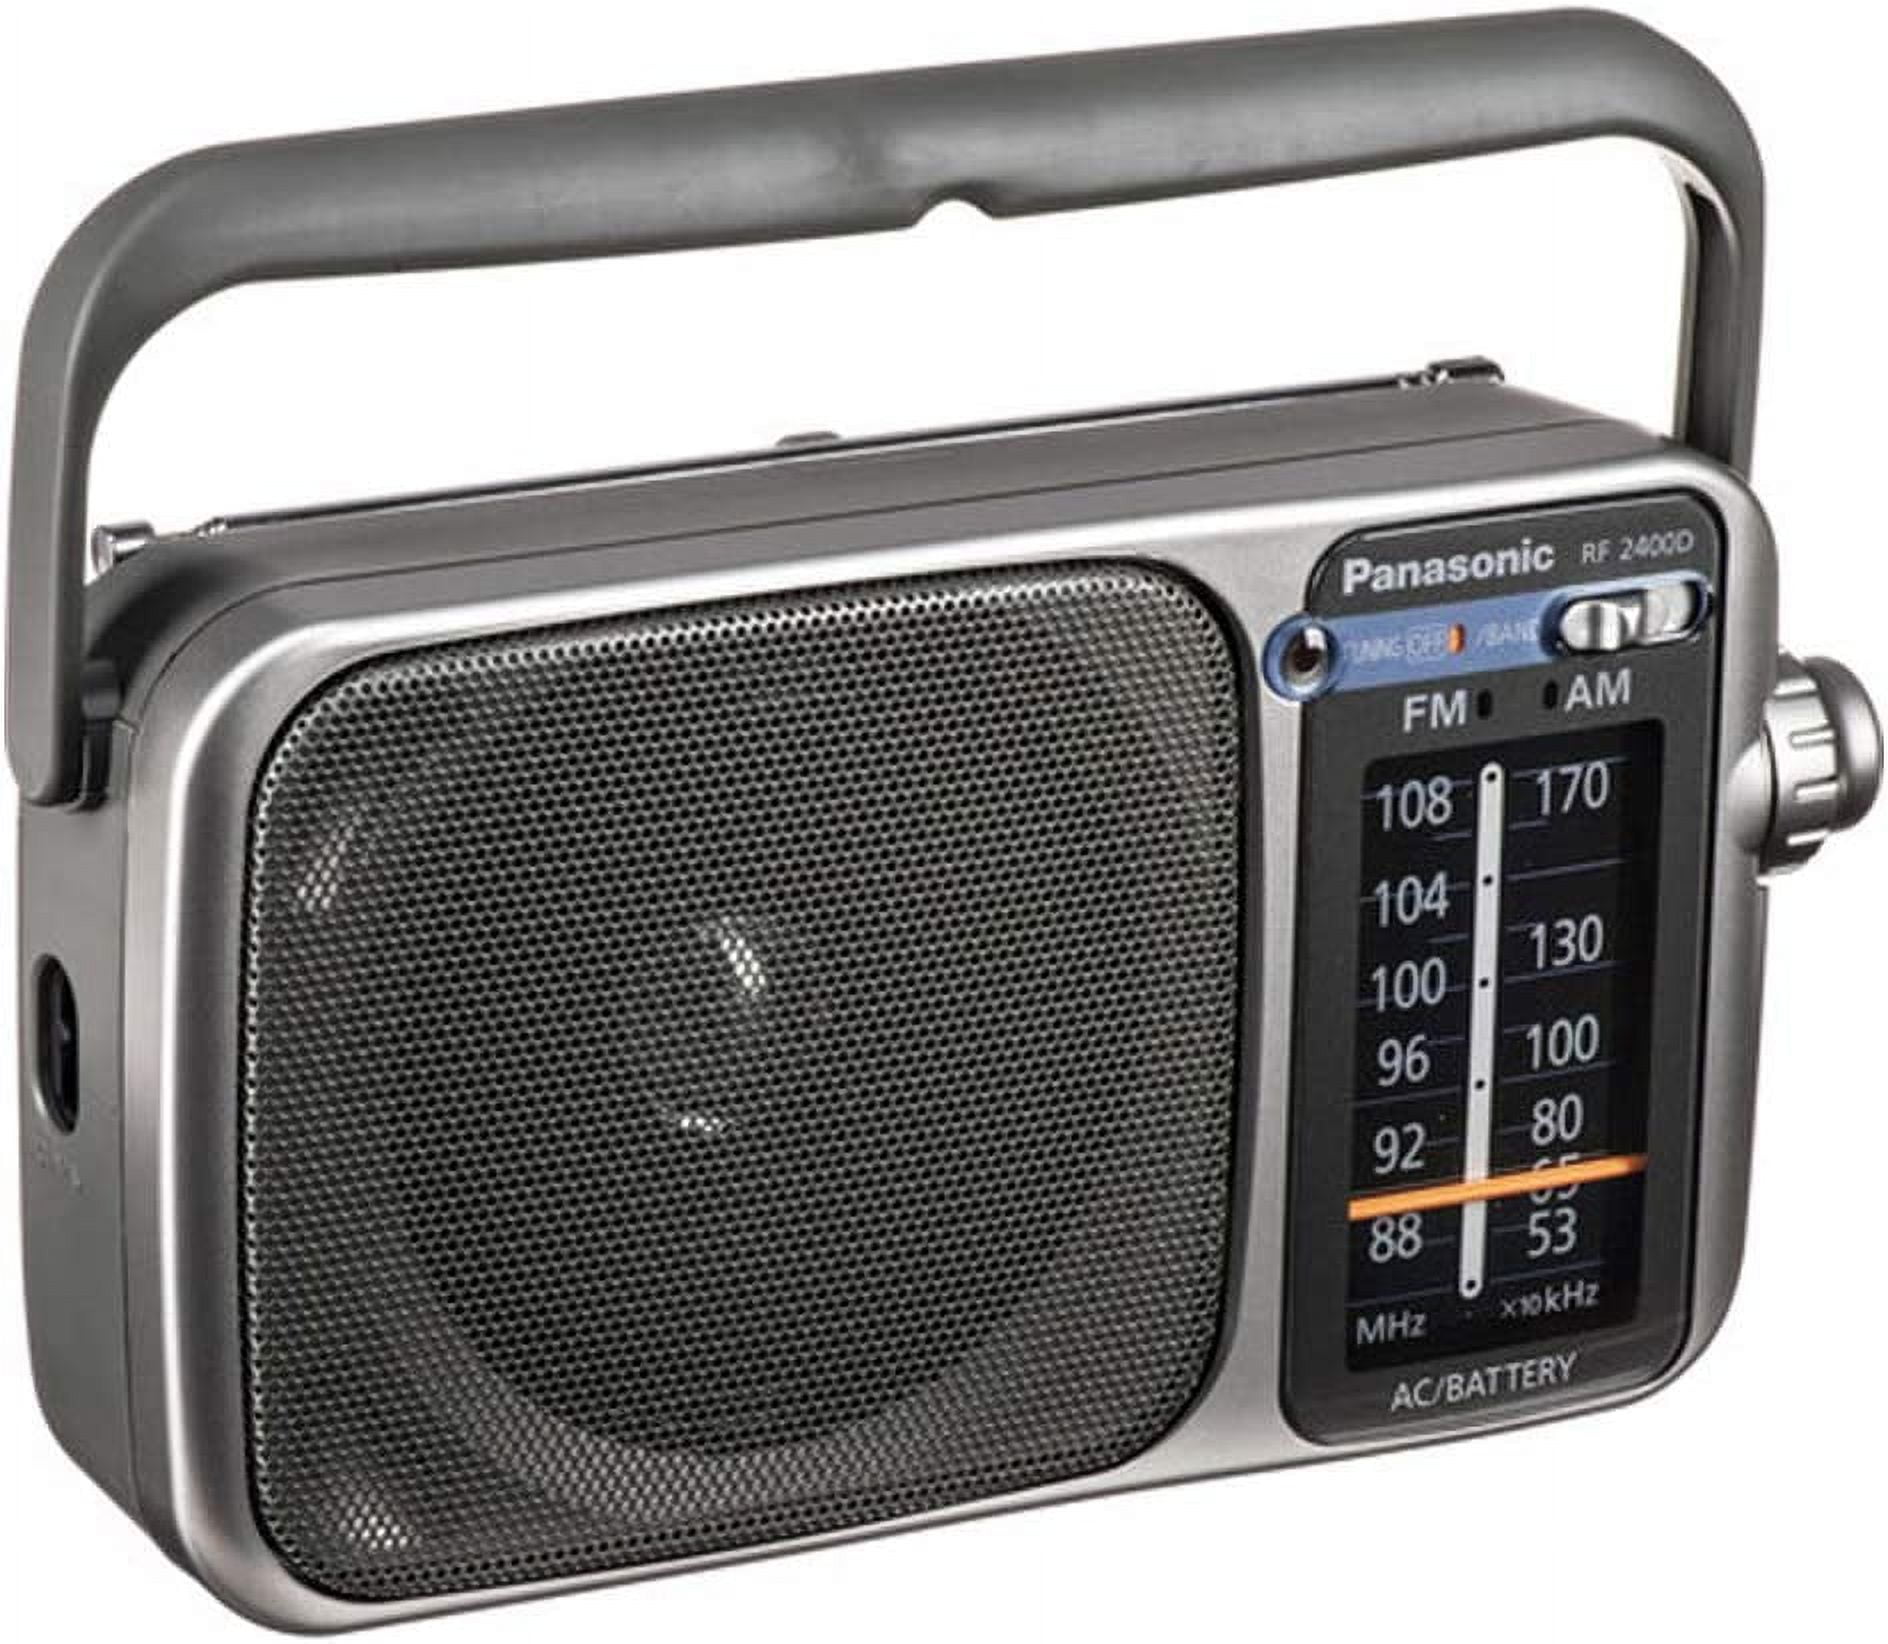 Radio PANASONIC RF2400 Analogique, tuner 2 fréquences FM/AM